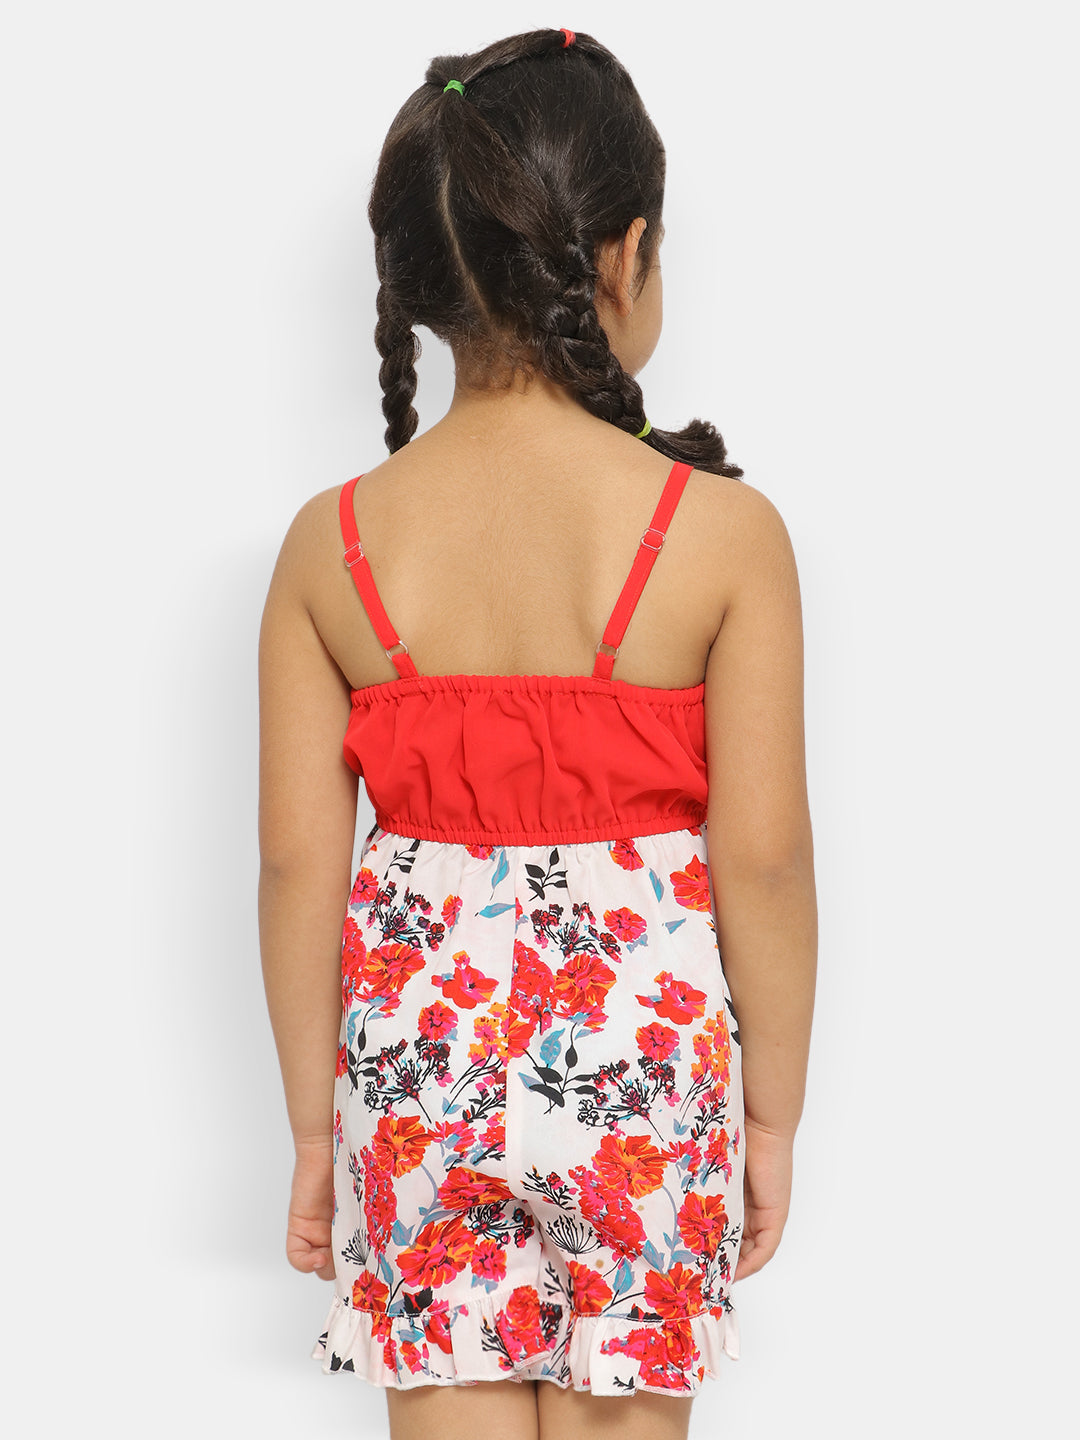 Nautinati Girls Floral Printed Shoulder Straps Ruffles Playsuit Jumpsuit